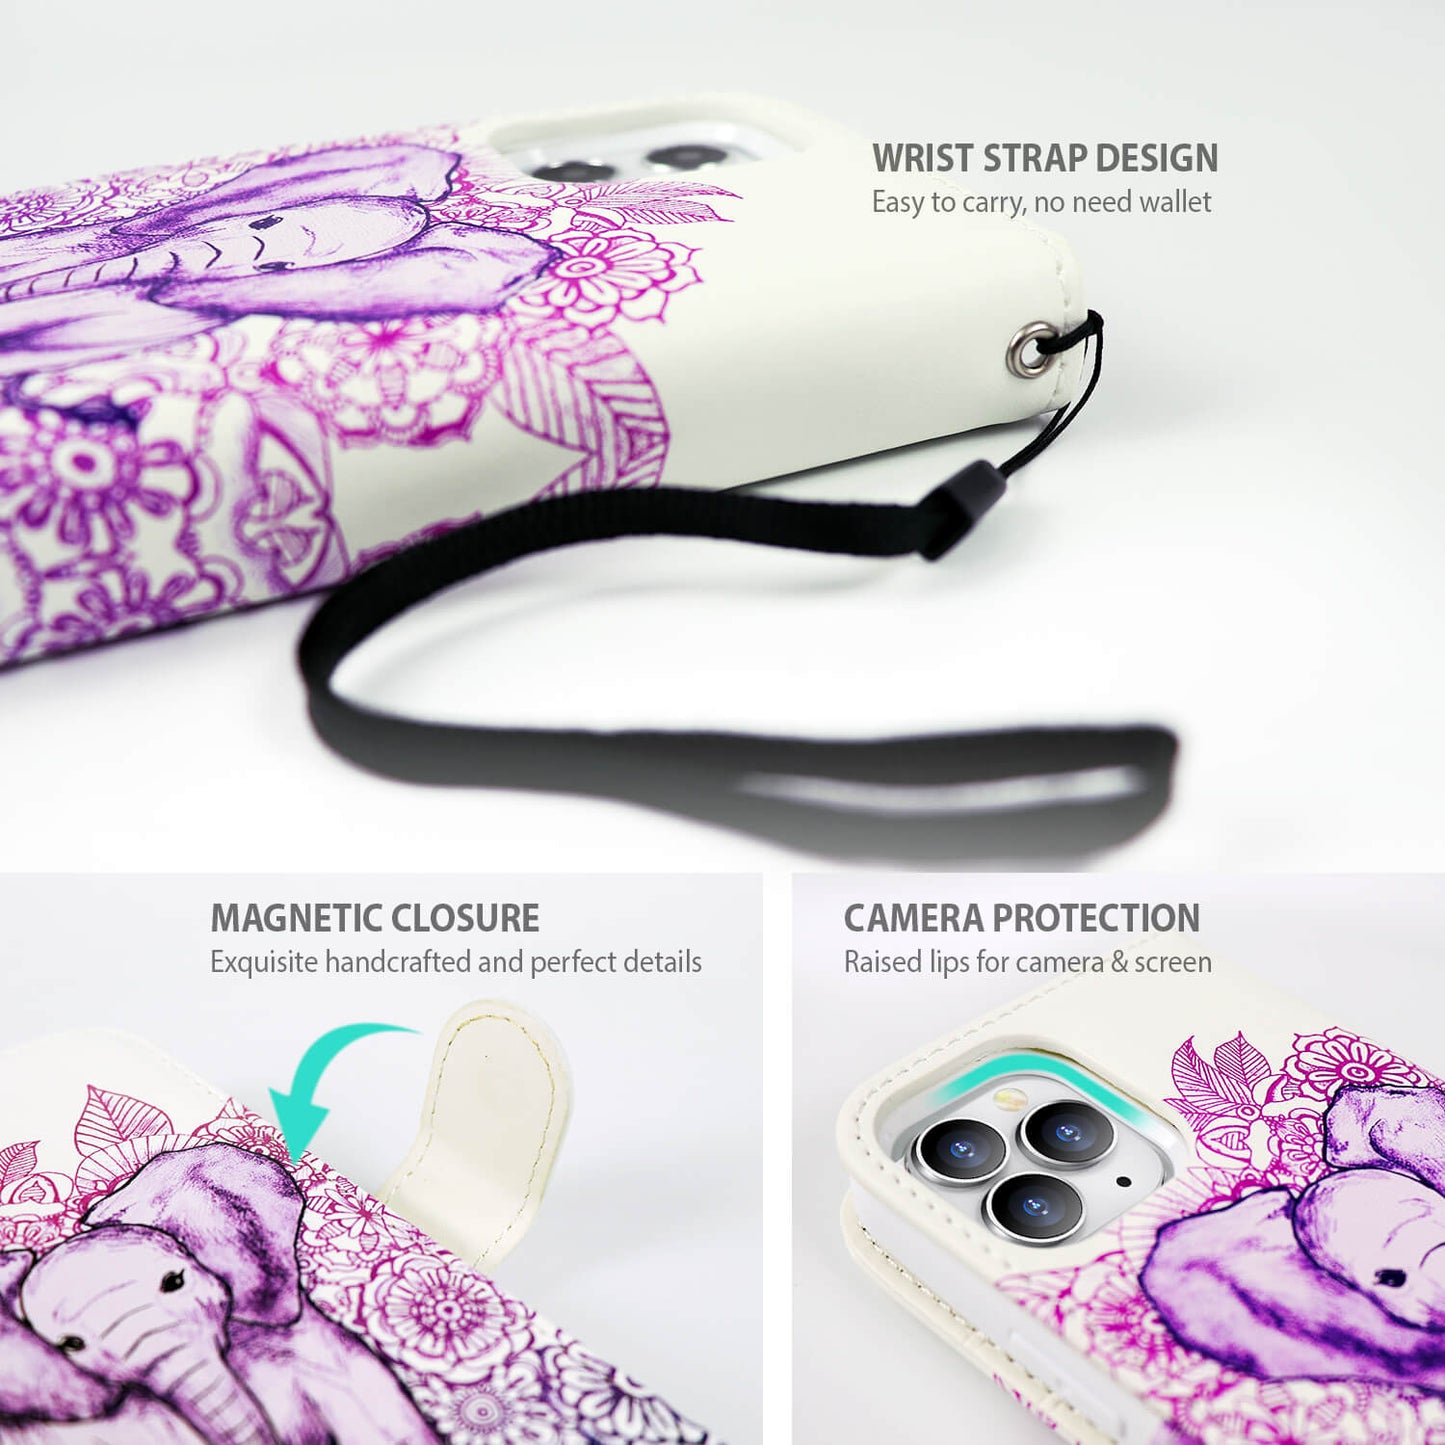 Tough On iPhone 12 Pro Max Case Magnetic Detachable Leather Elephant